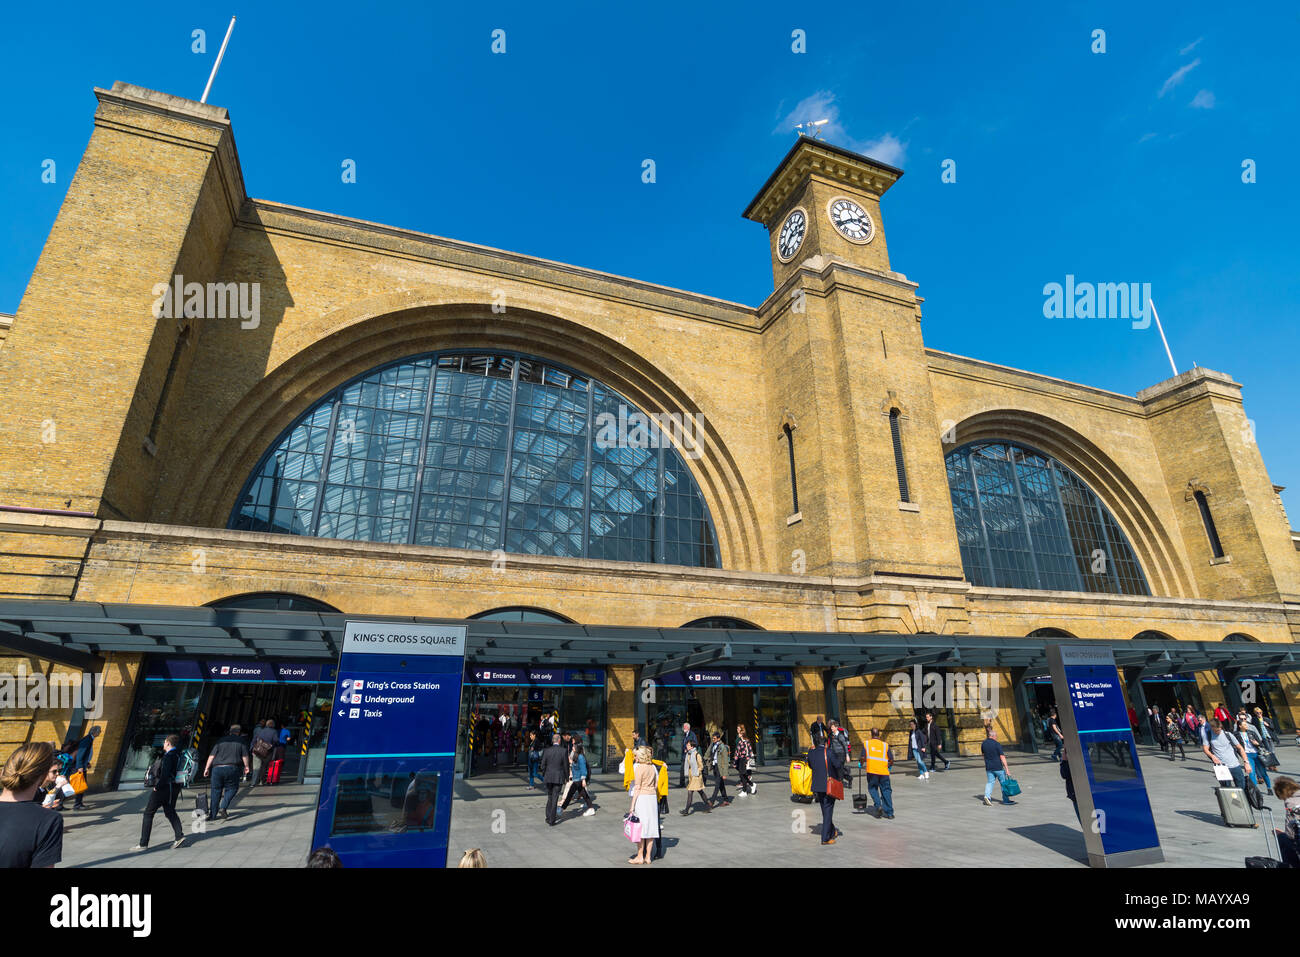 King's Cross station, London, UK Stock Photo